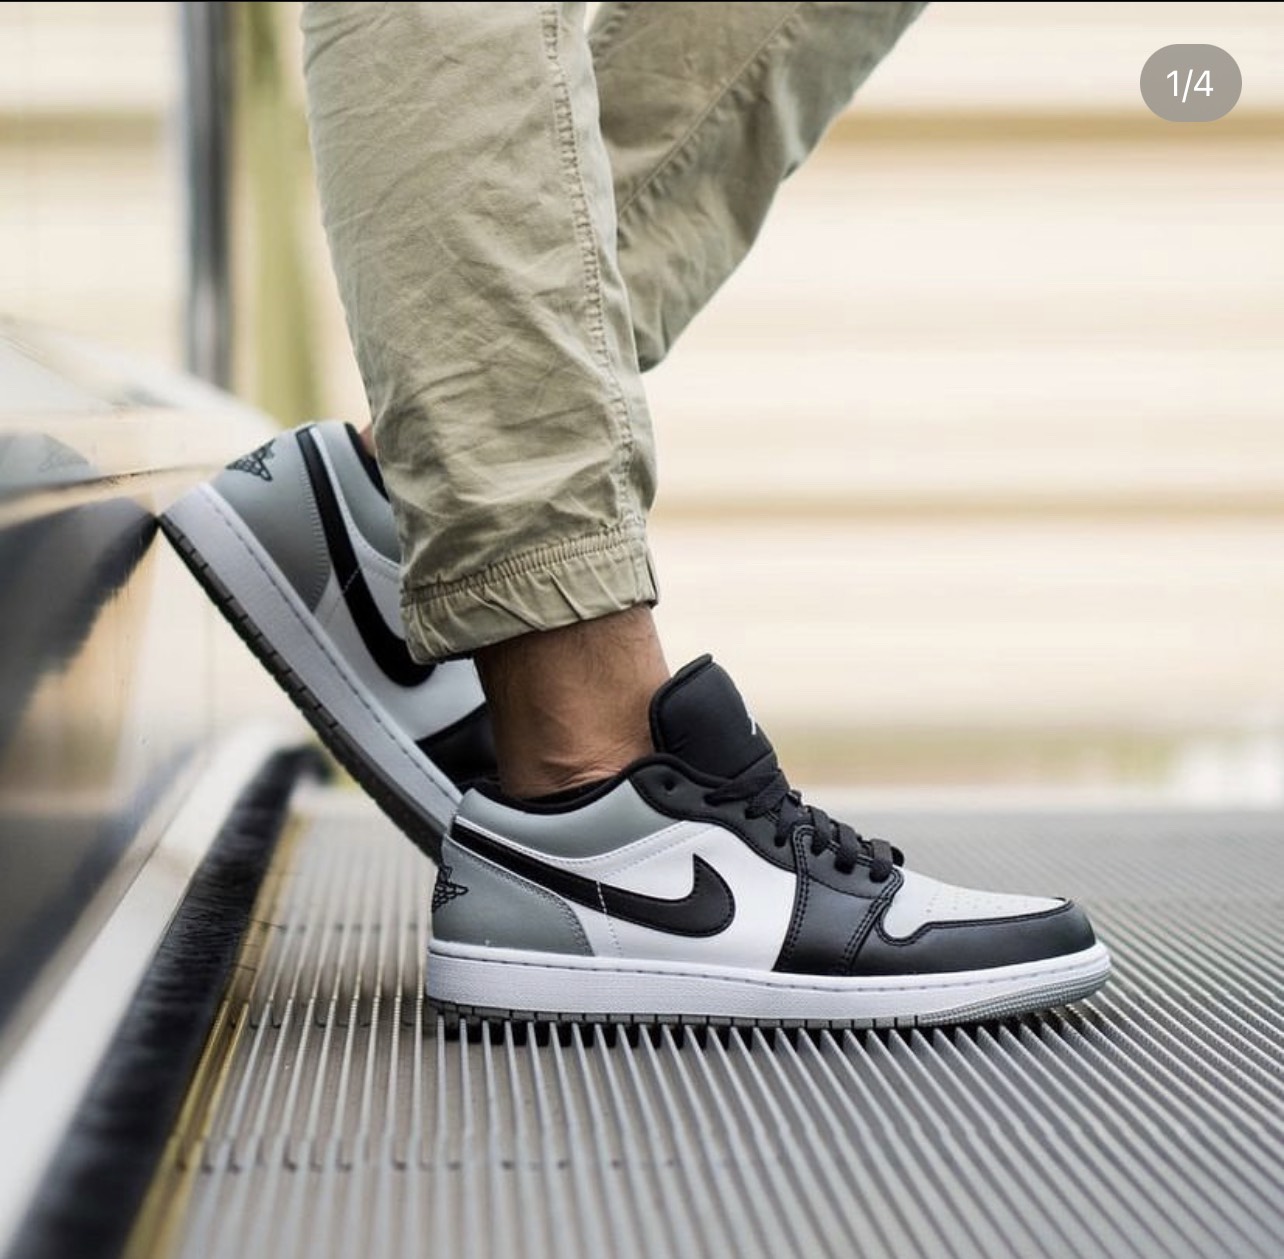 Giày Nike Air Jordan 1 Low ‘shadow Toe 553558 052 Uspox Siêu Thị